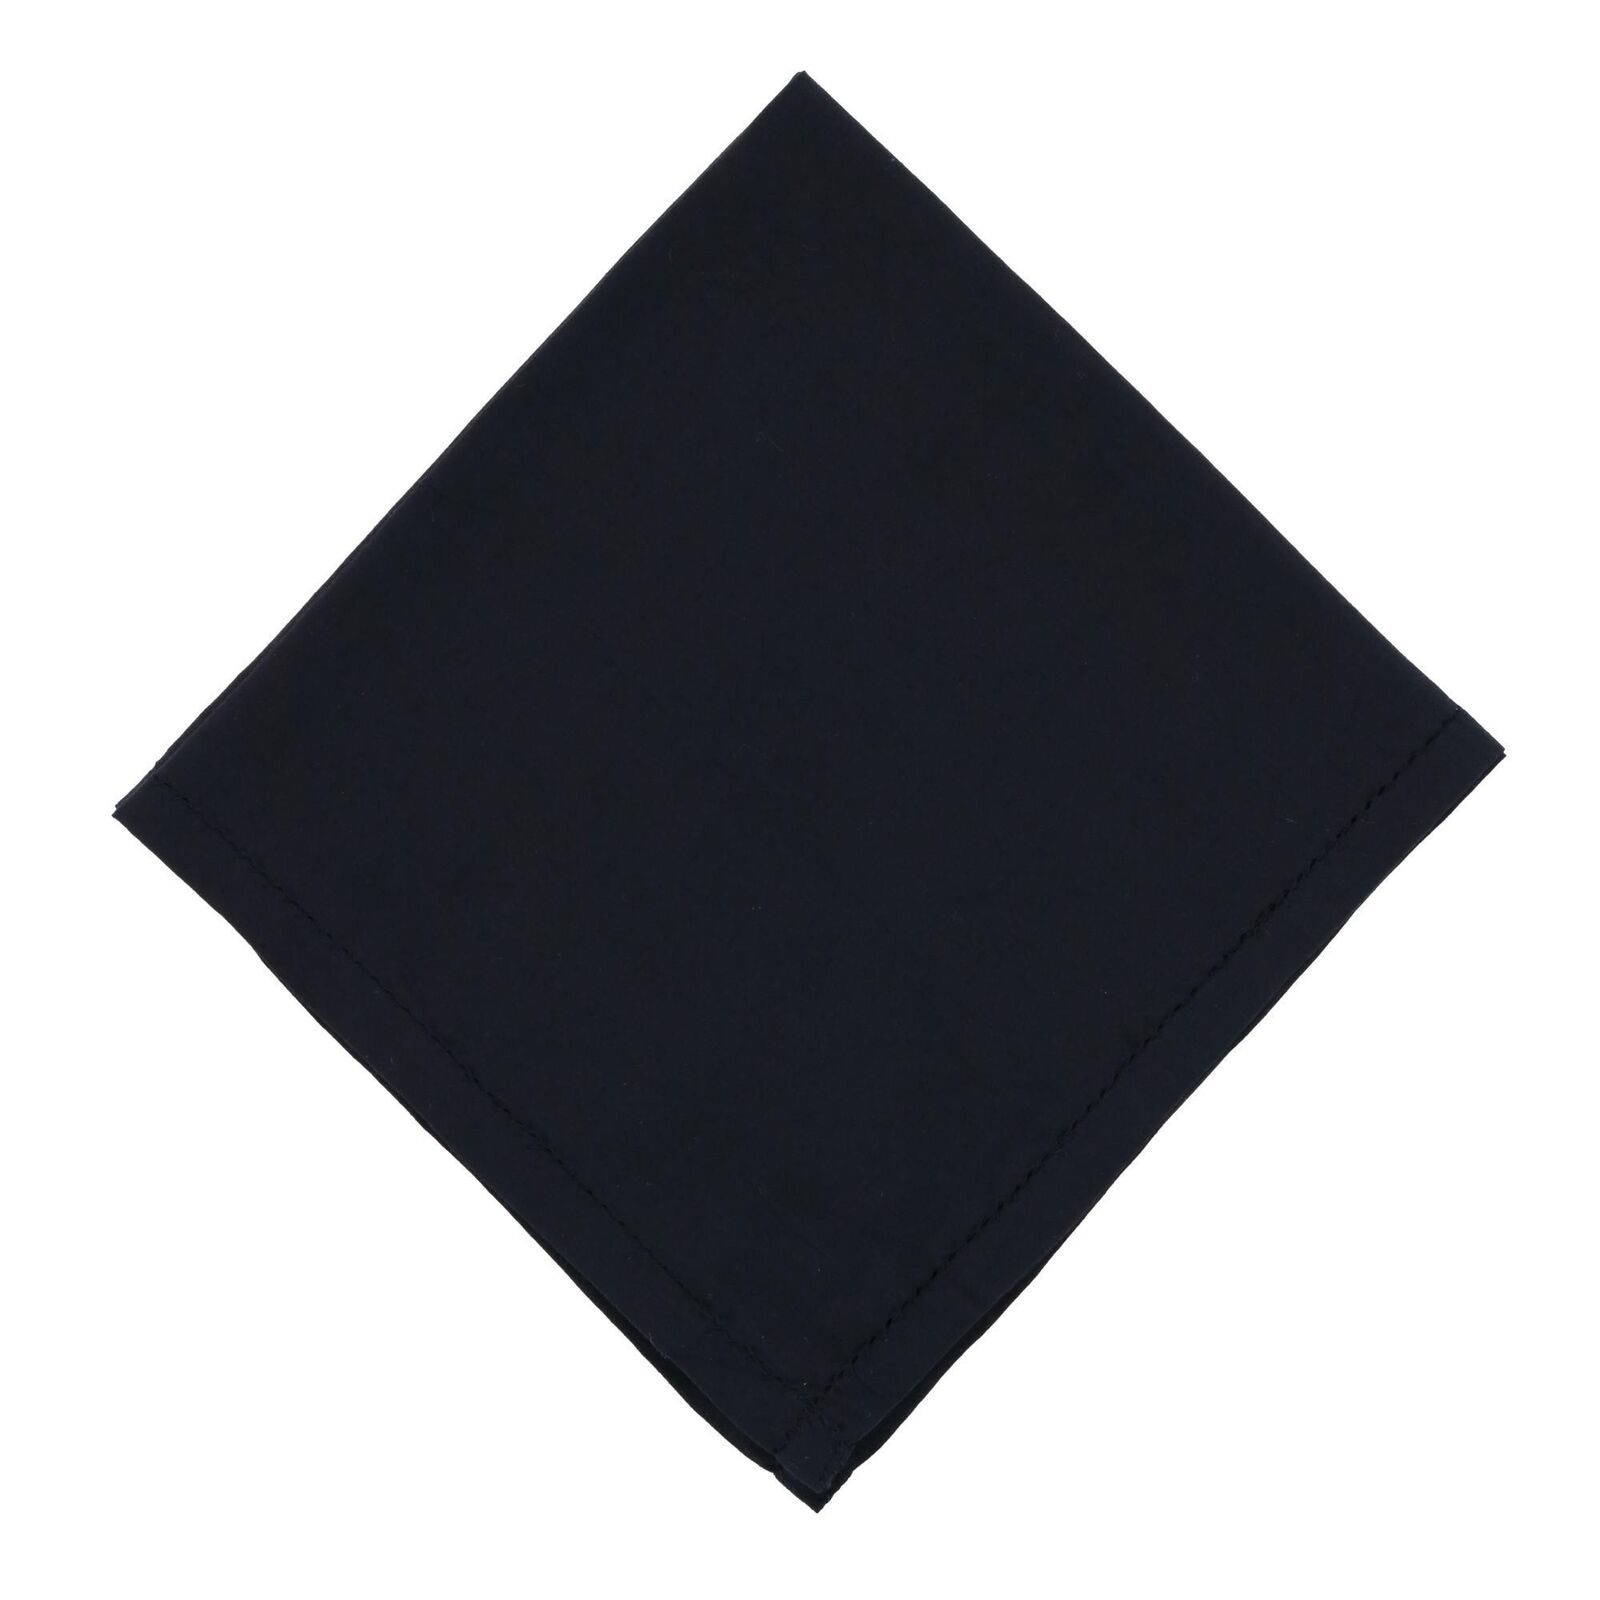 New CTM Large Black Hemstitched Handkerchief